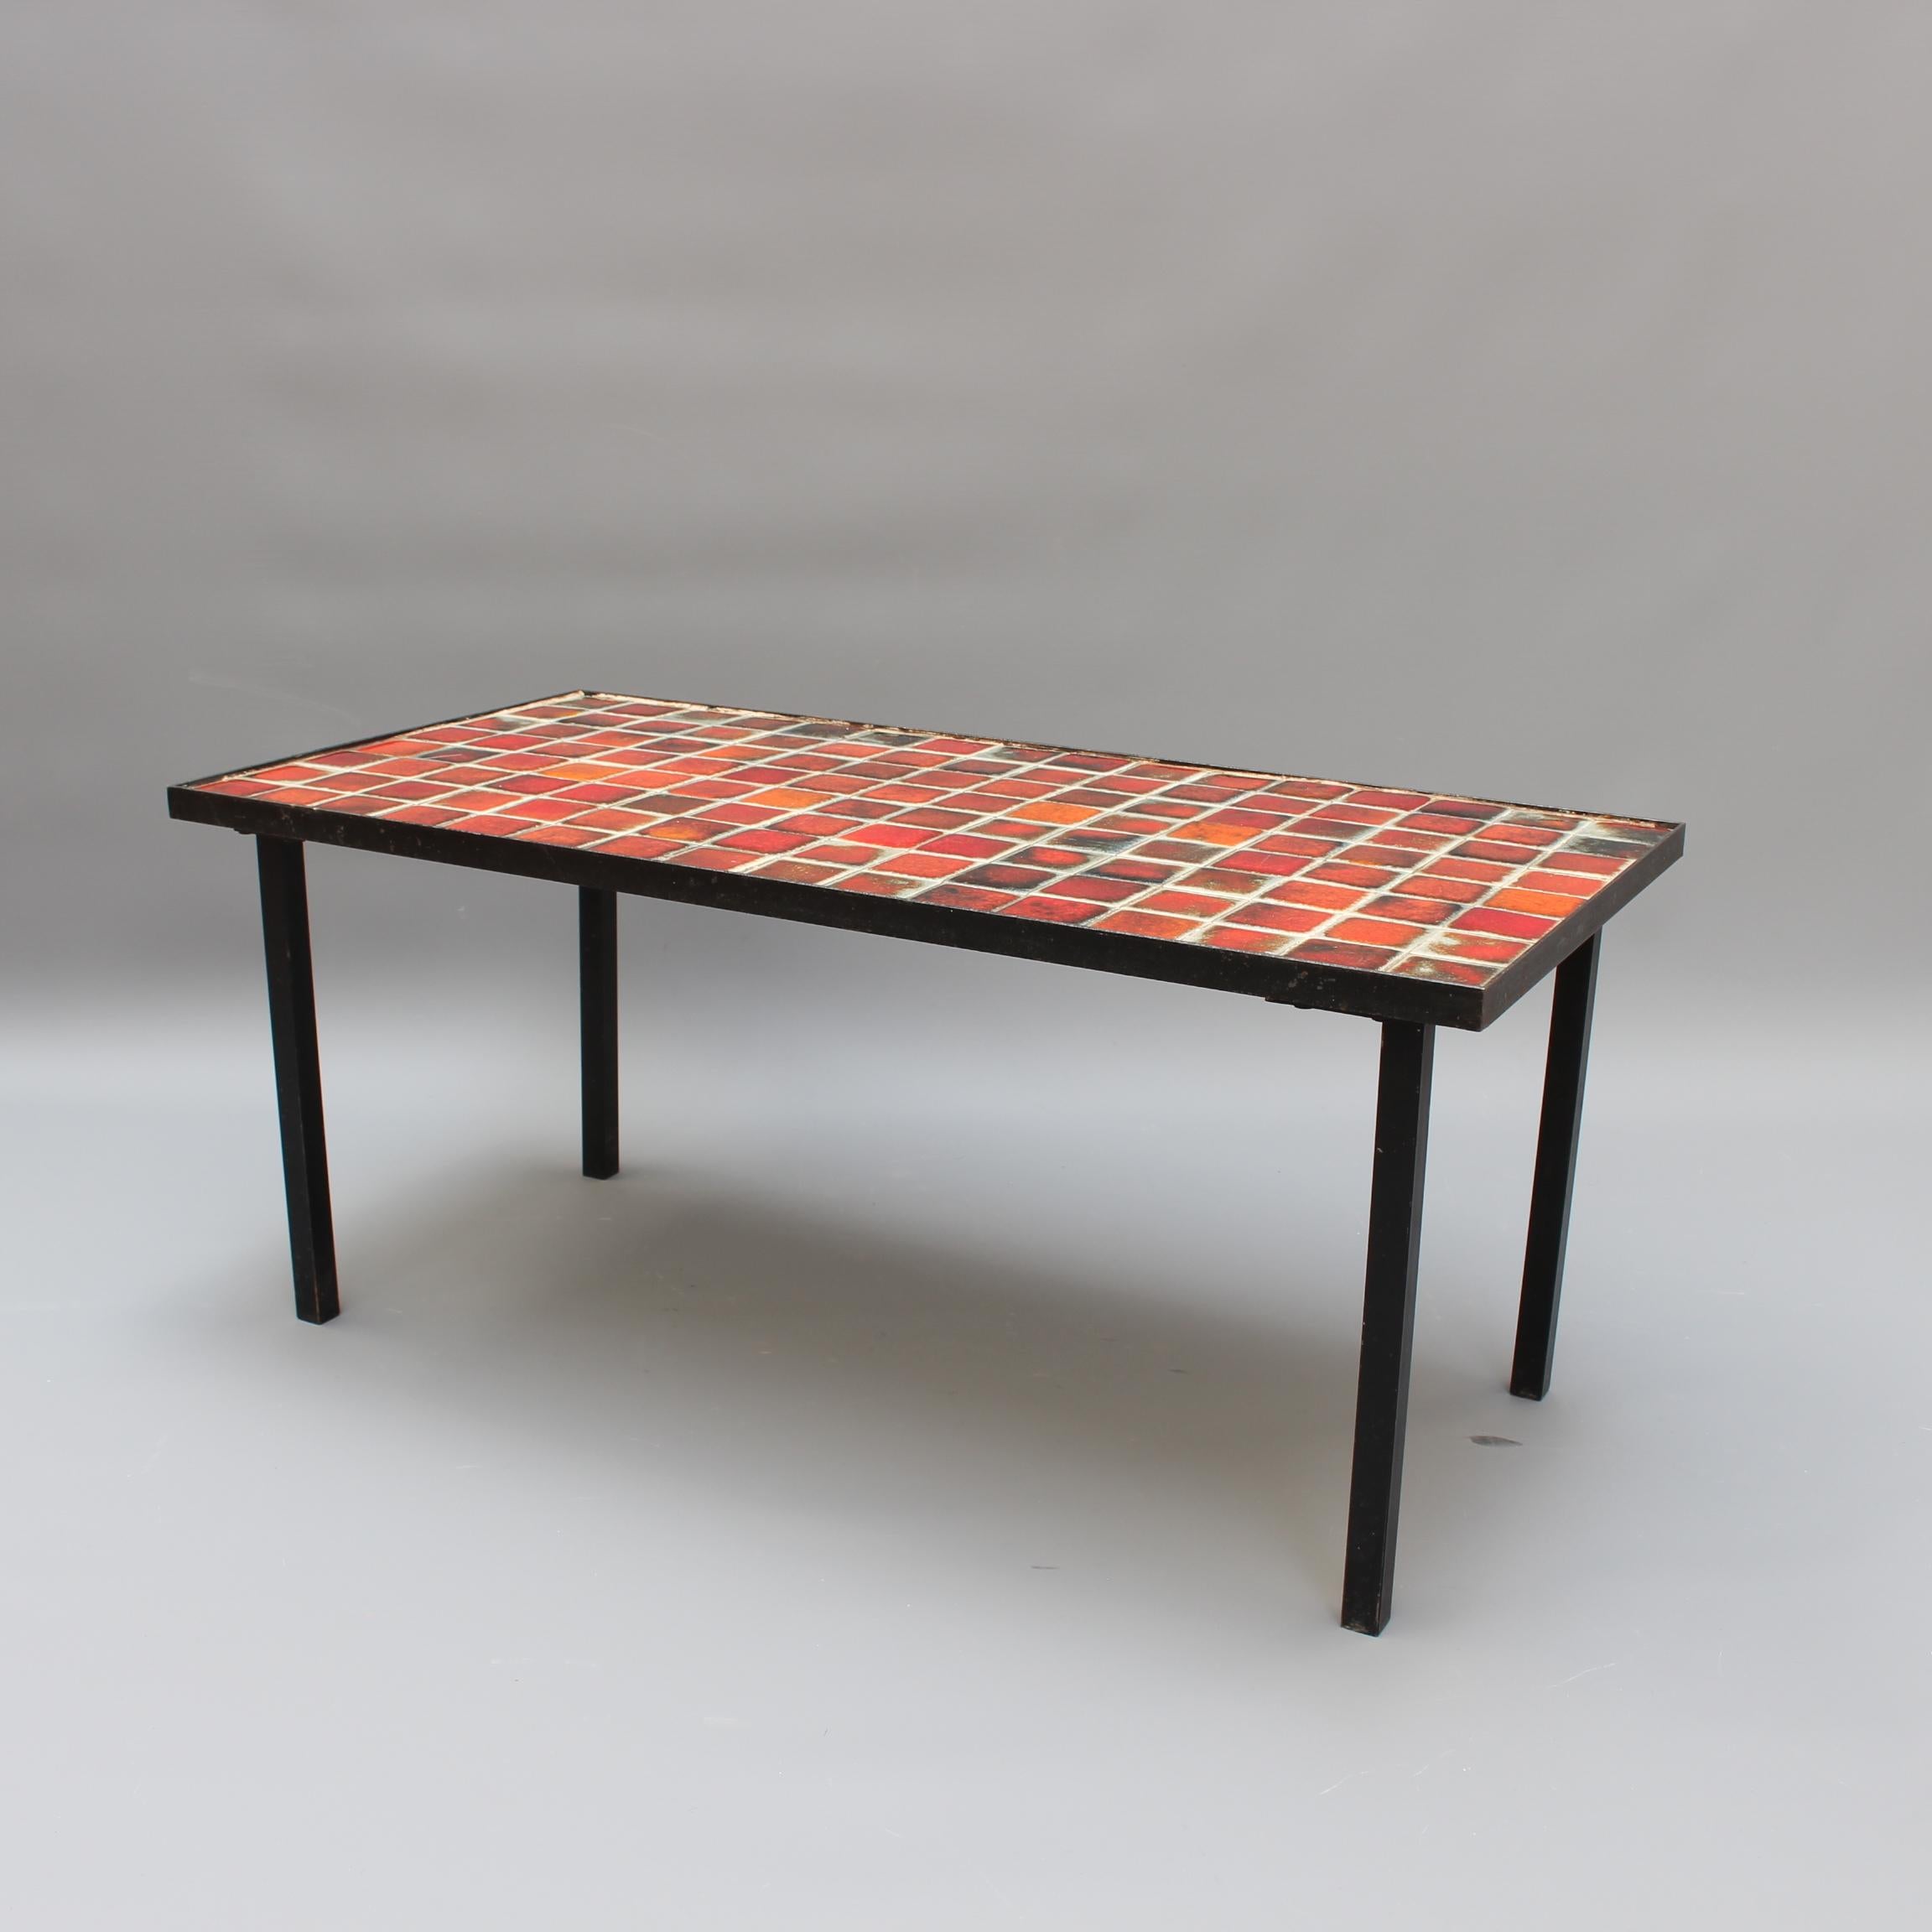 ceramic tiles table